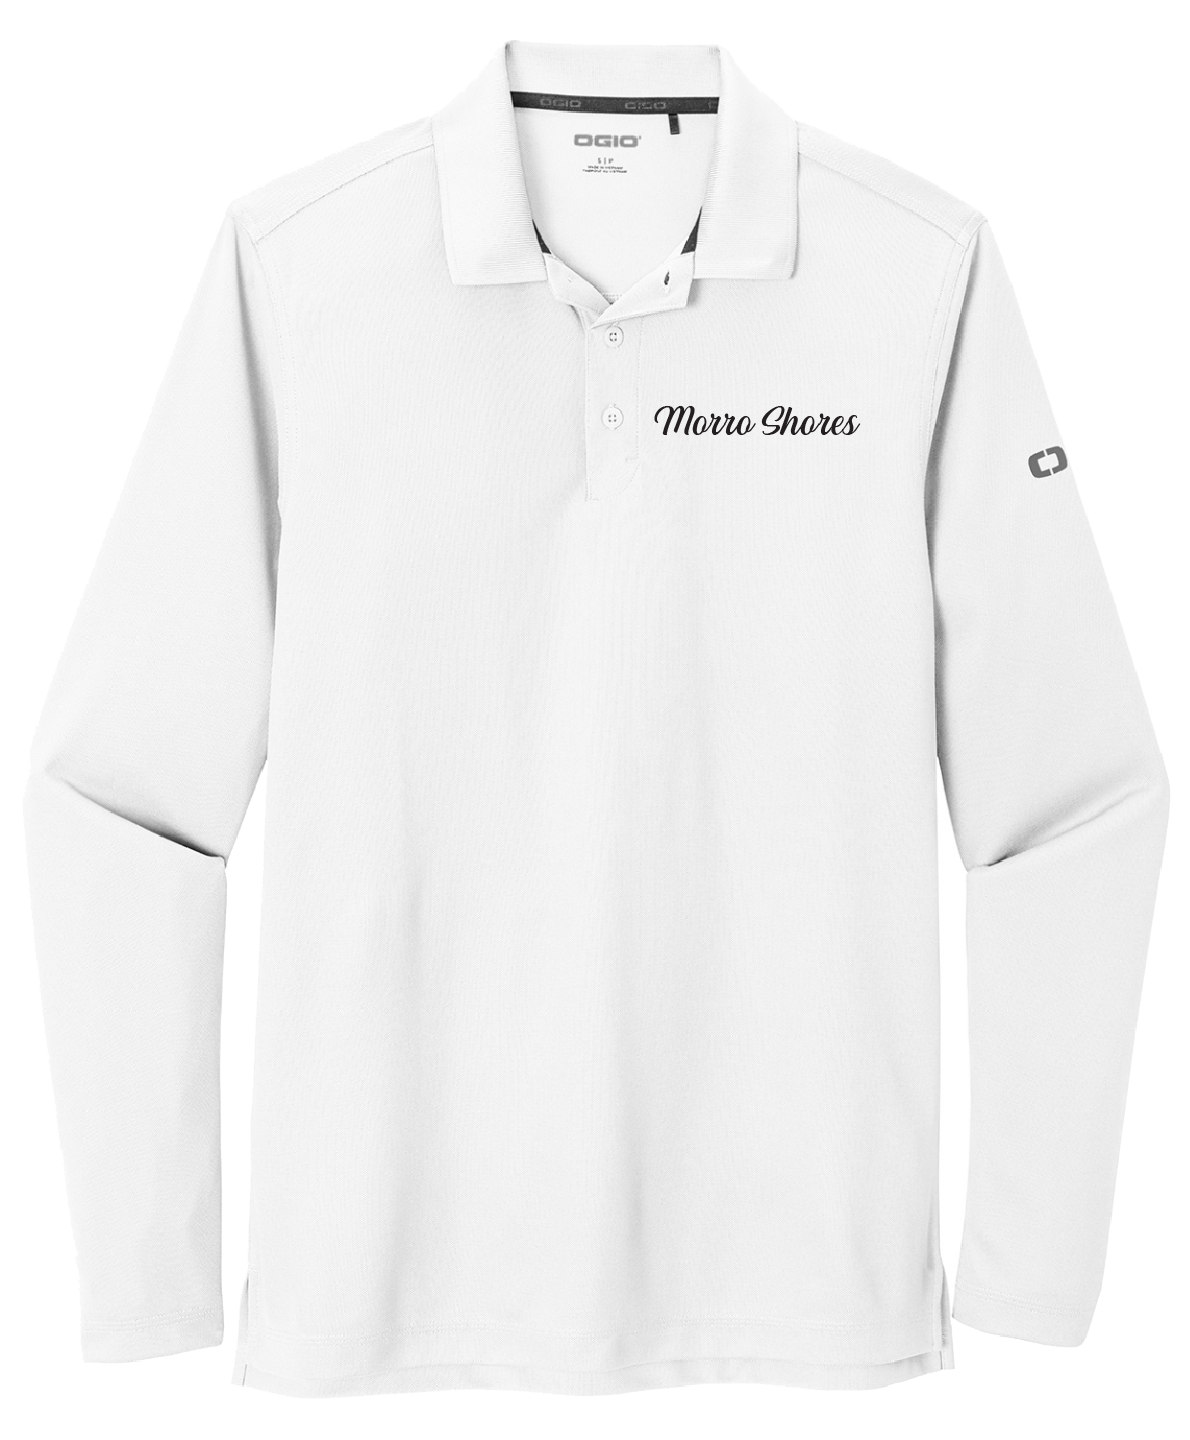 Morro Shores - Mens - OGIO ® Caliber2.0 Long Sleeve